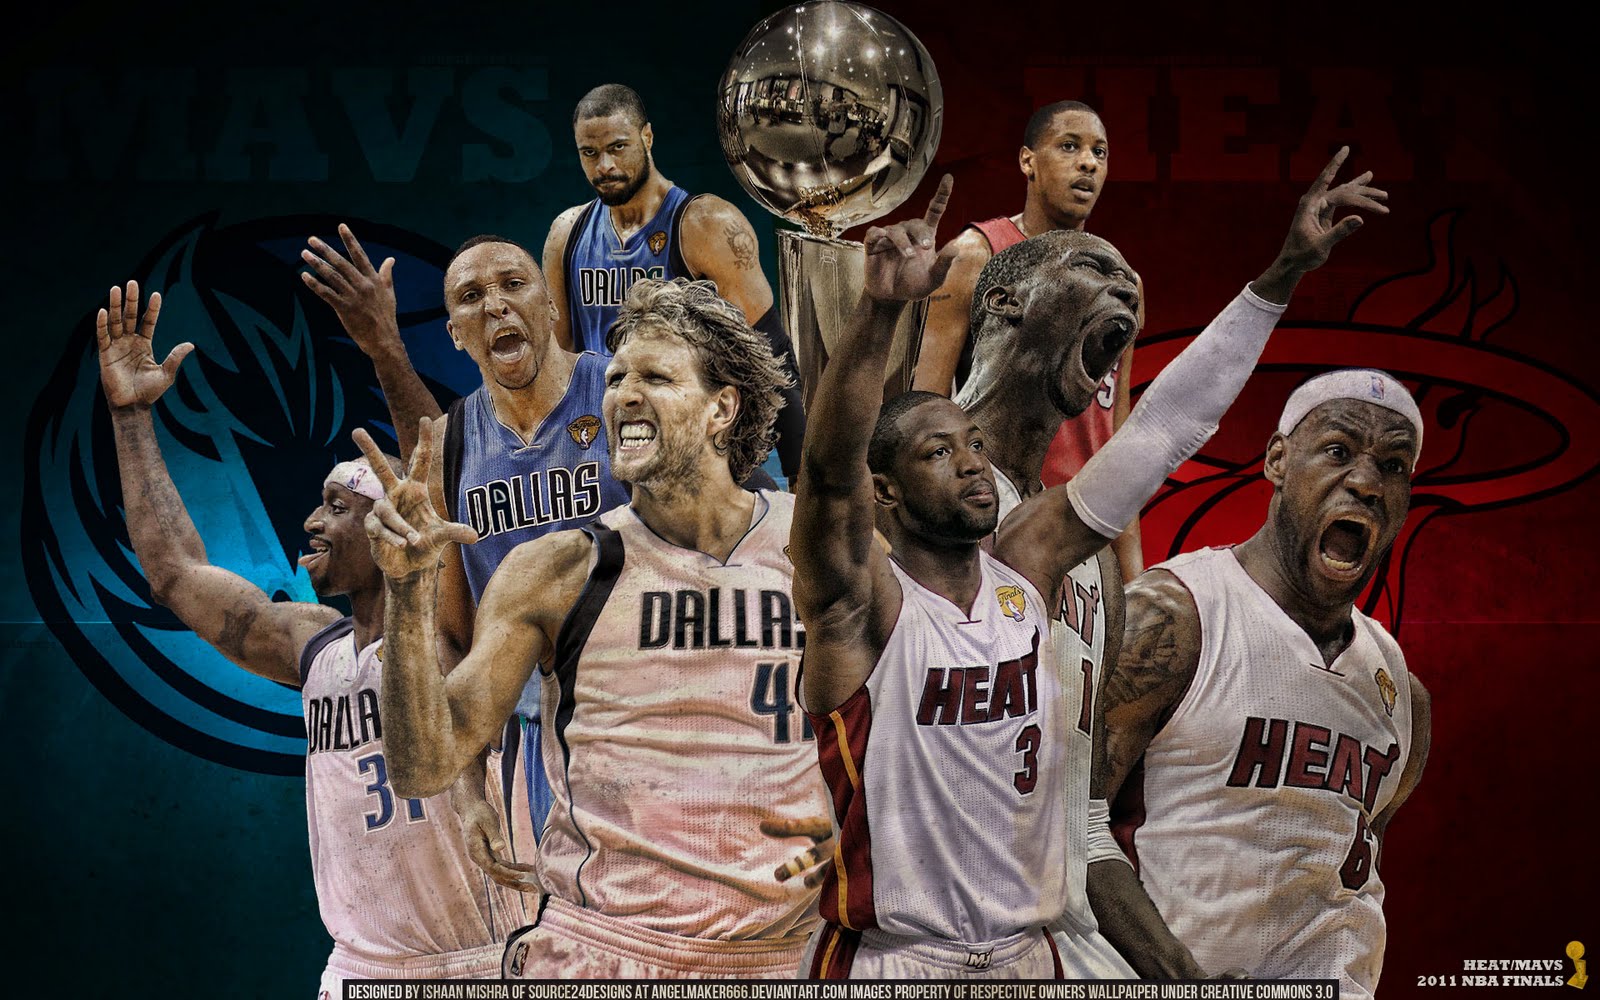 http://3.bp.blogspot.com/-8IbUNC73Pvg/TfWl5Esz95I/AAAAAAAAFtM/XWH0qeP4GcA/s1600/Heat-Mavs-2011-NBA-Finals-Widescreen-Wallpaper-BasketWallpapers.com-.jpg